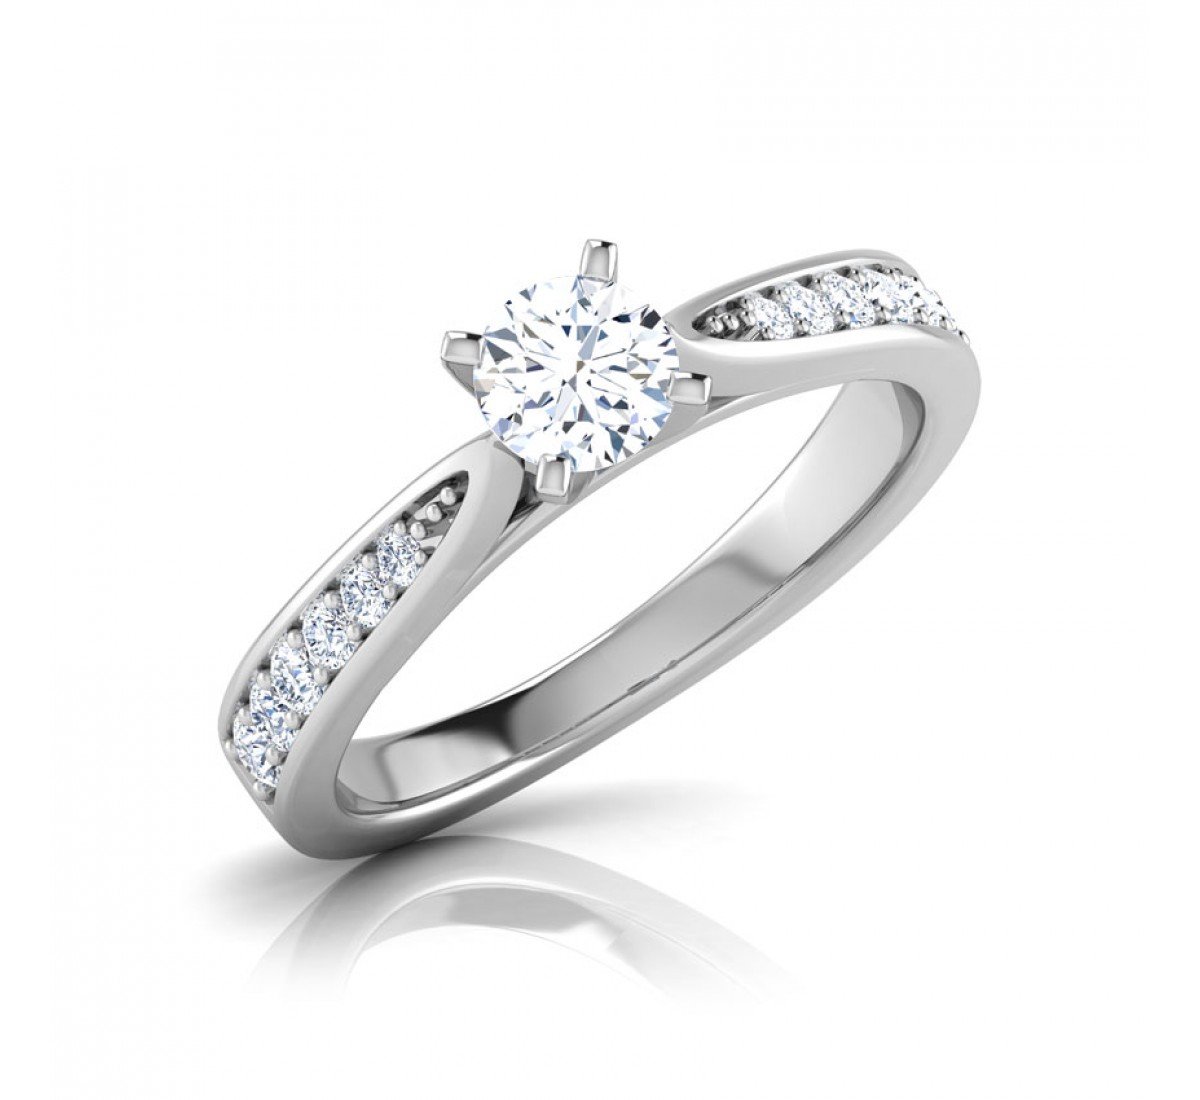 Zest Solitaire Diamond Ring